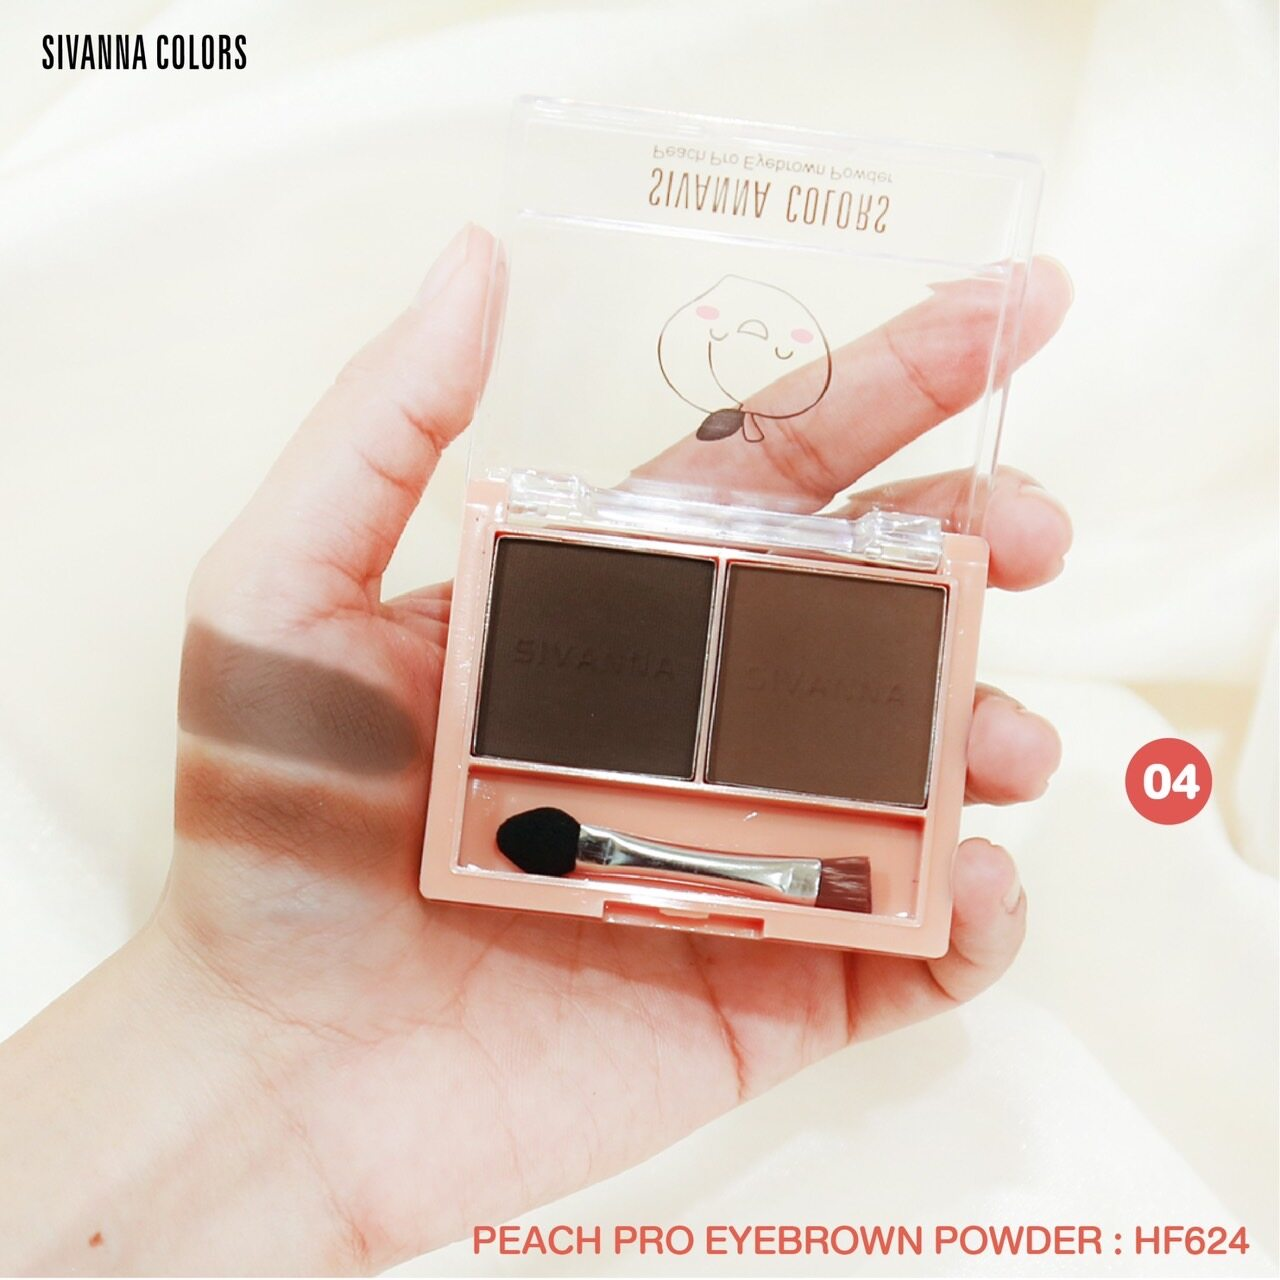 Sivanna Peach Pro Eyebrown Powder #HF624 : ซิวานน่า พีช โปร ที่เขียนคิ้ว